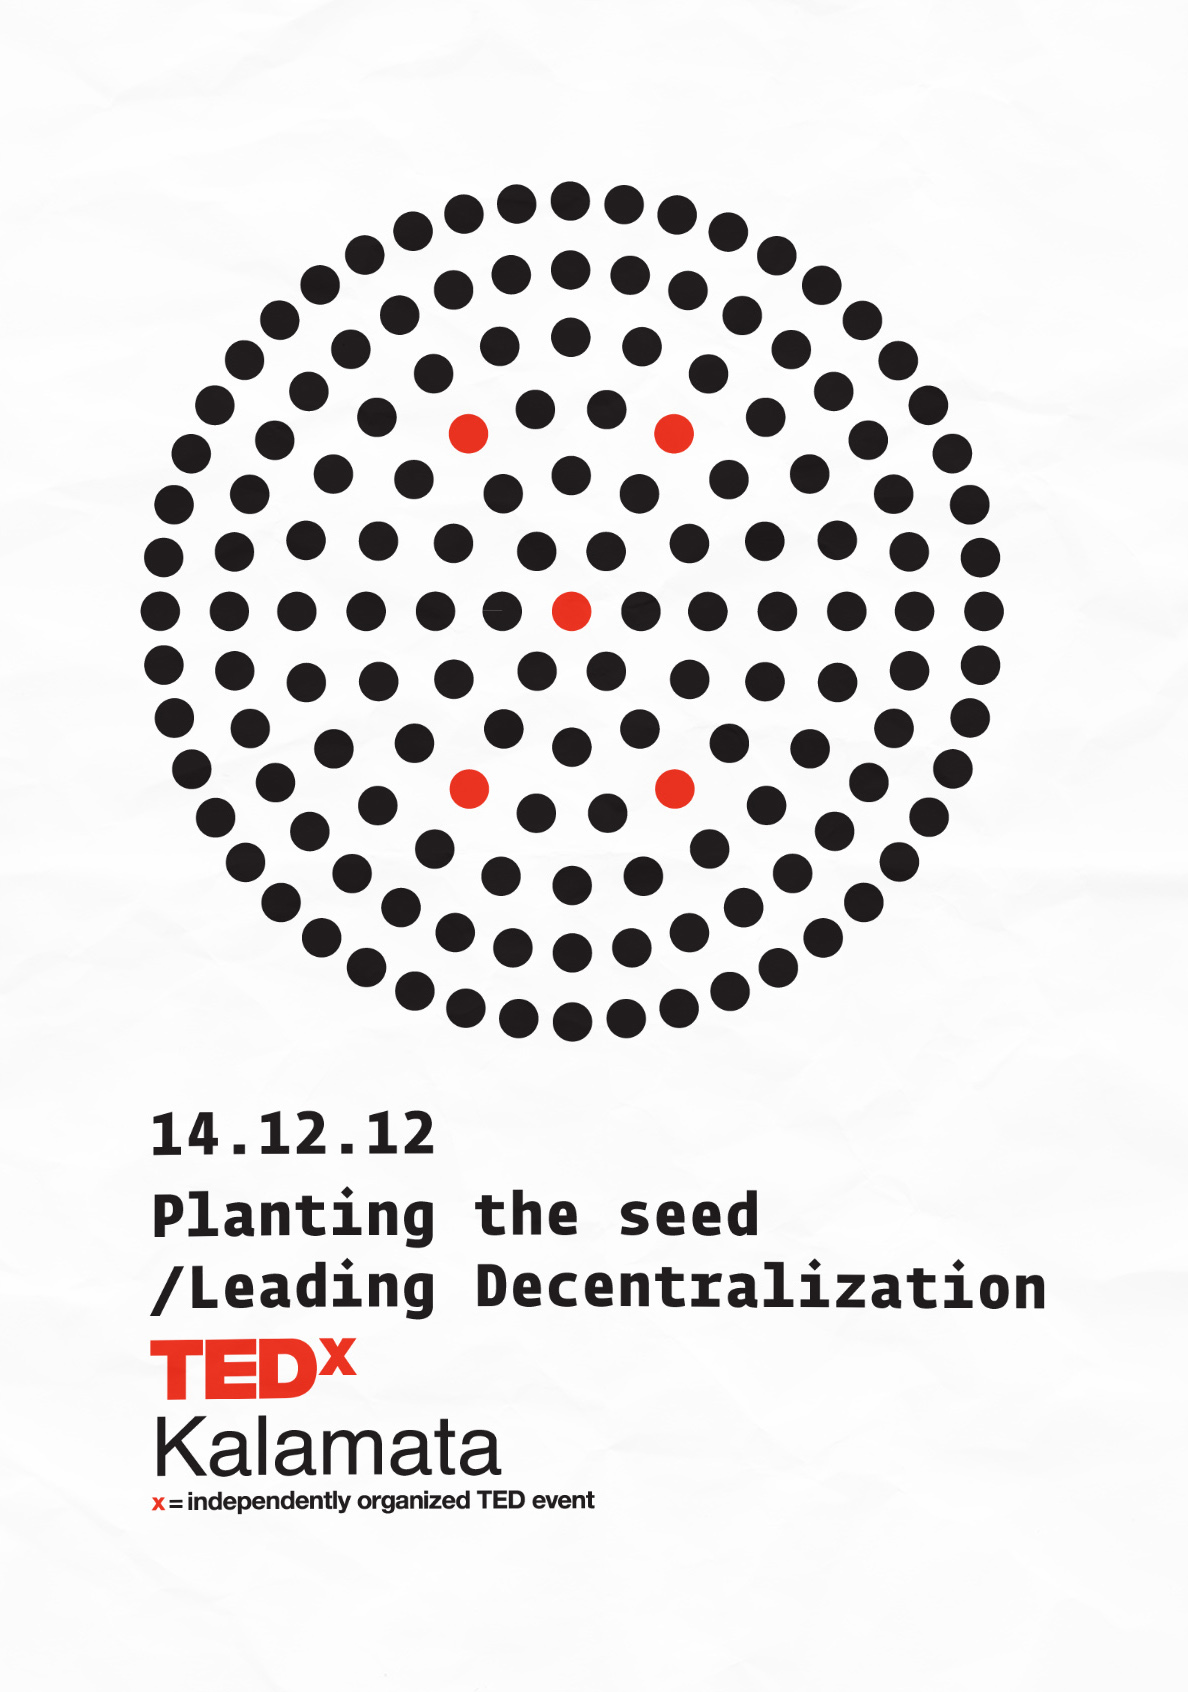 Exhibition  congress TEDx conference Entertainment kalamata Greece Decentralization TEDxKalamata